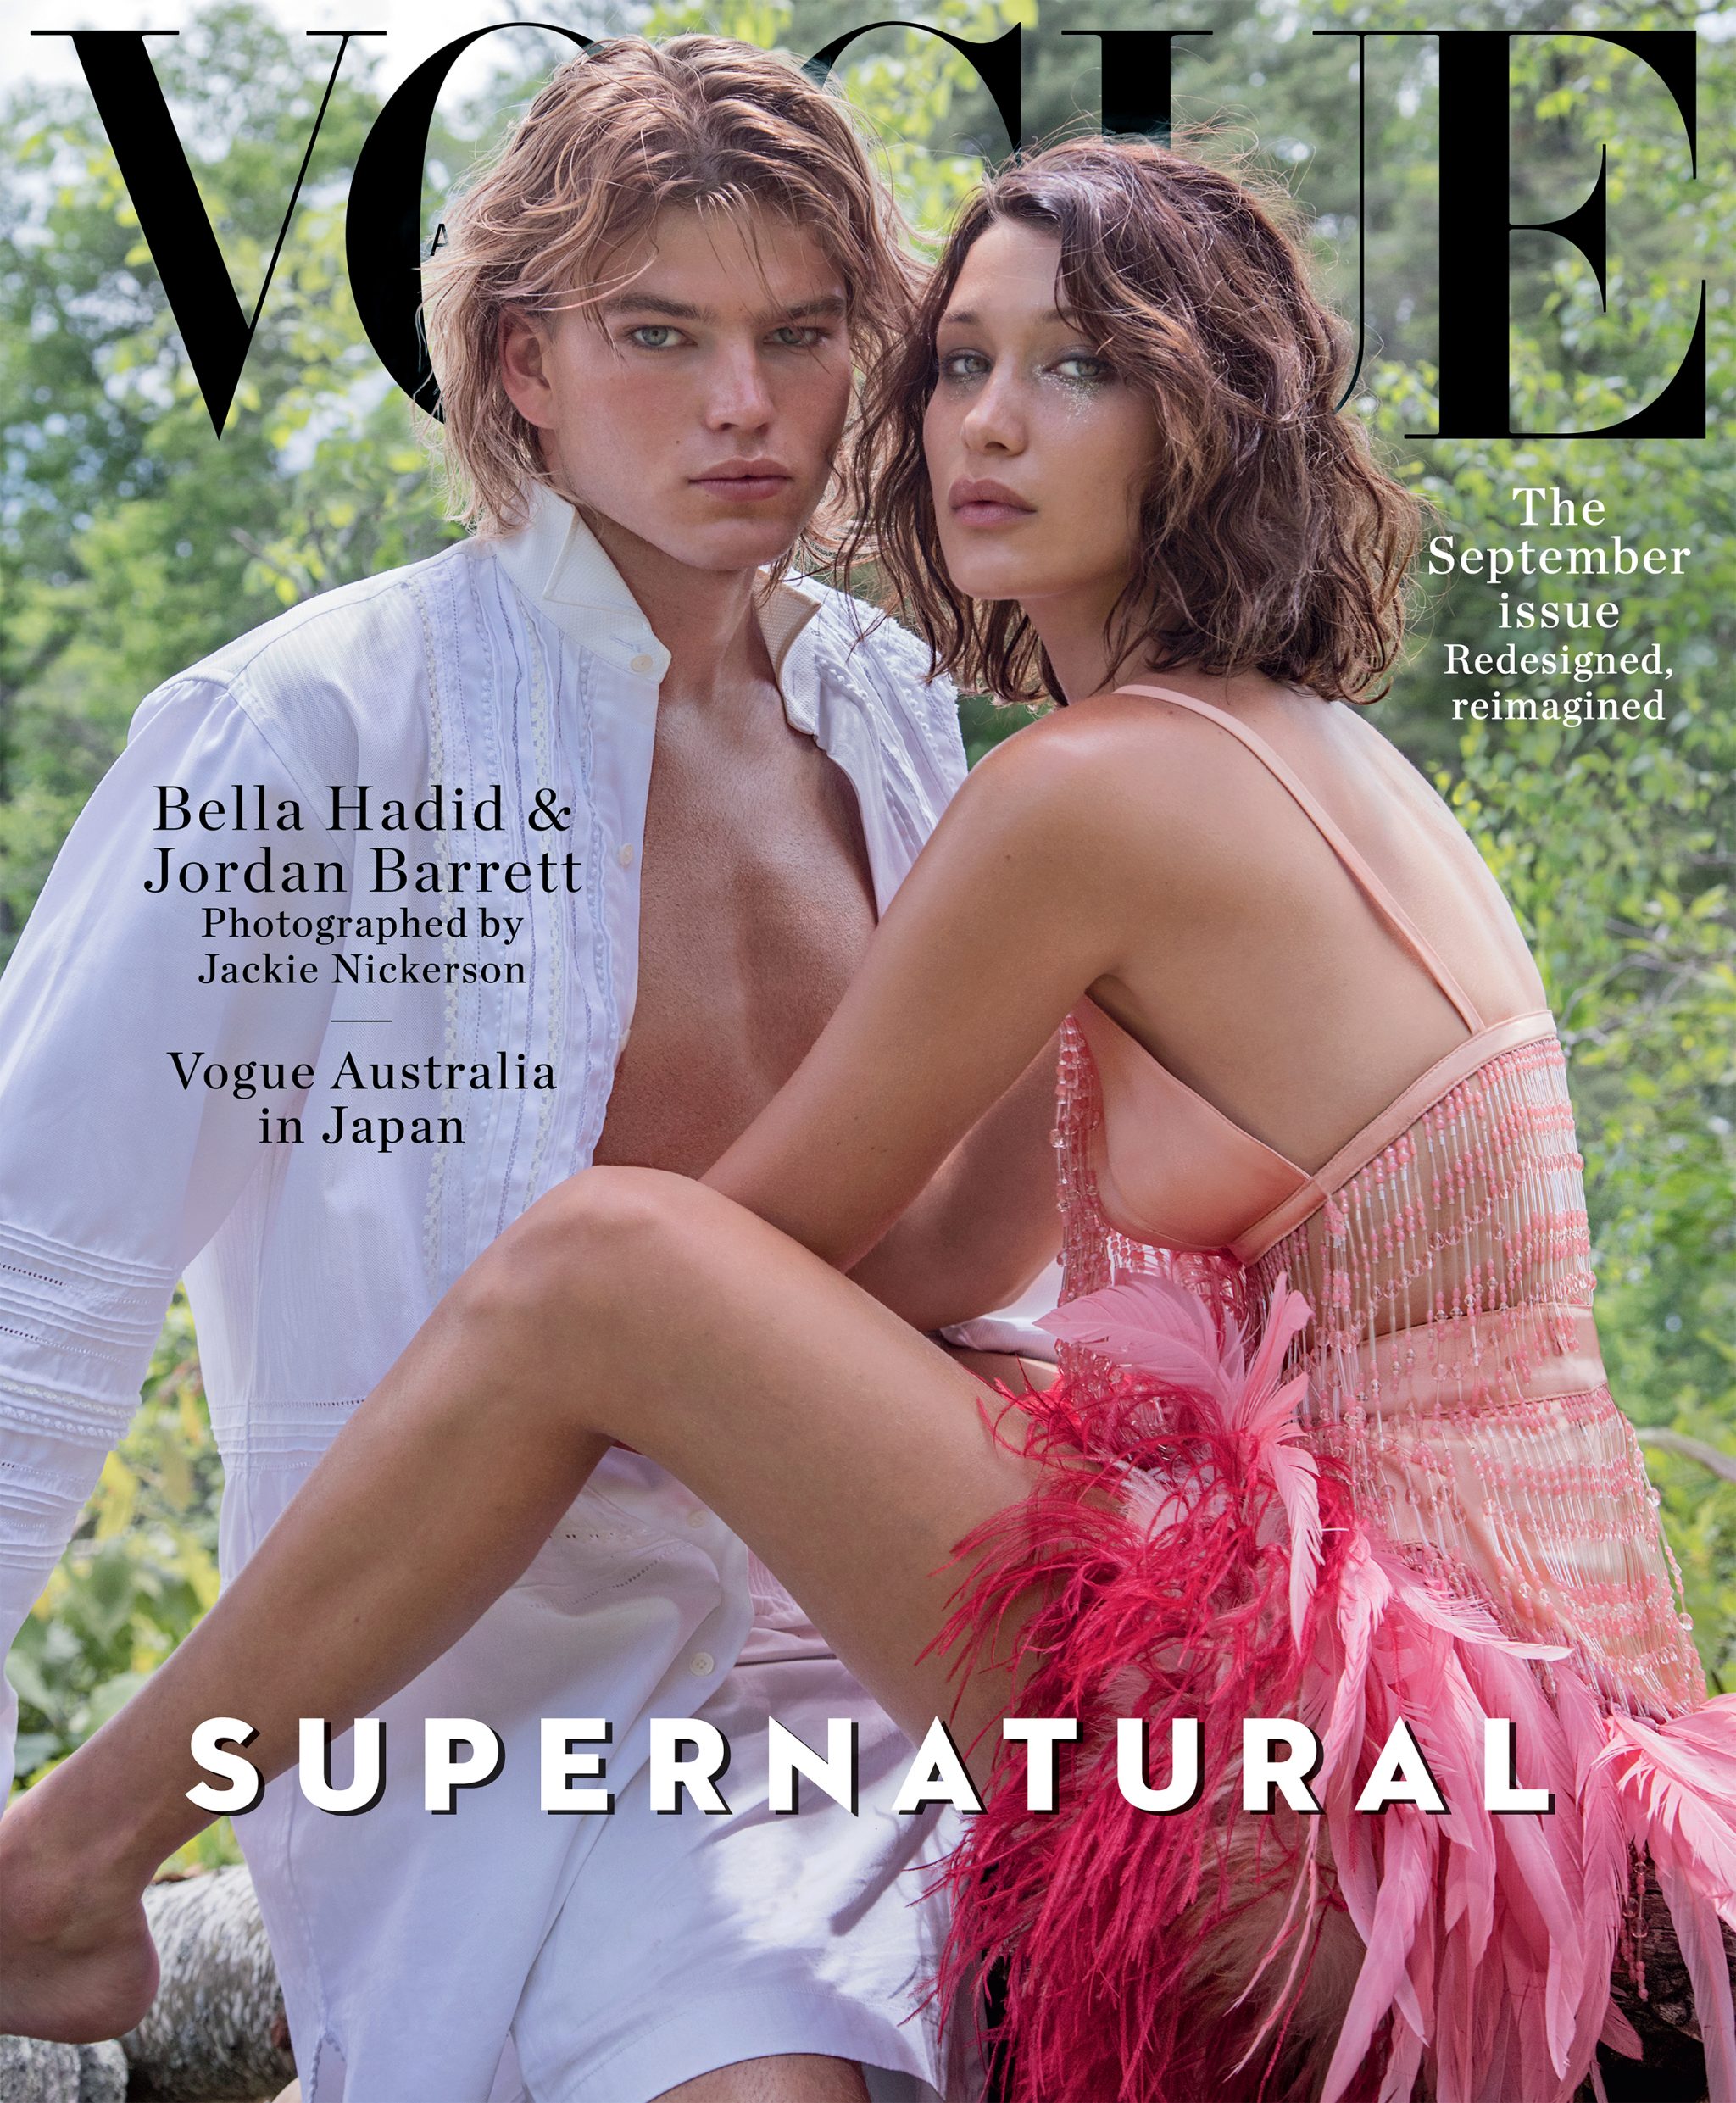  | Vogue Australia: Supernatural  | 1